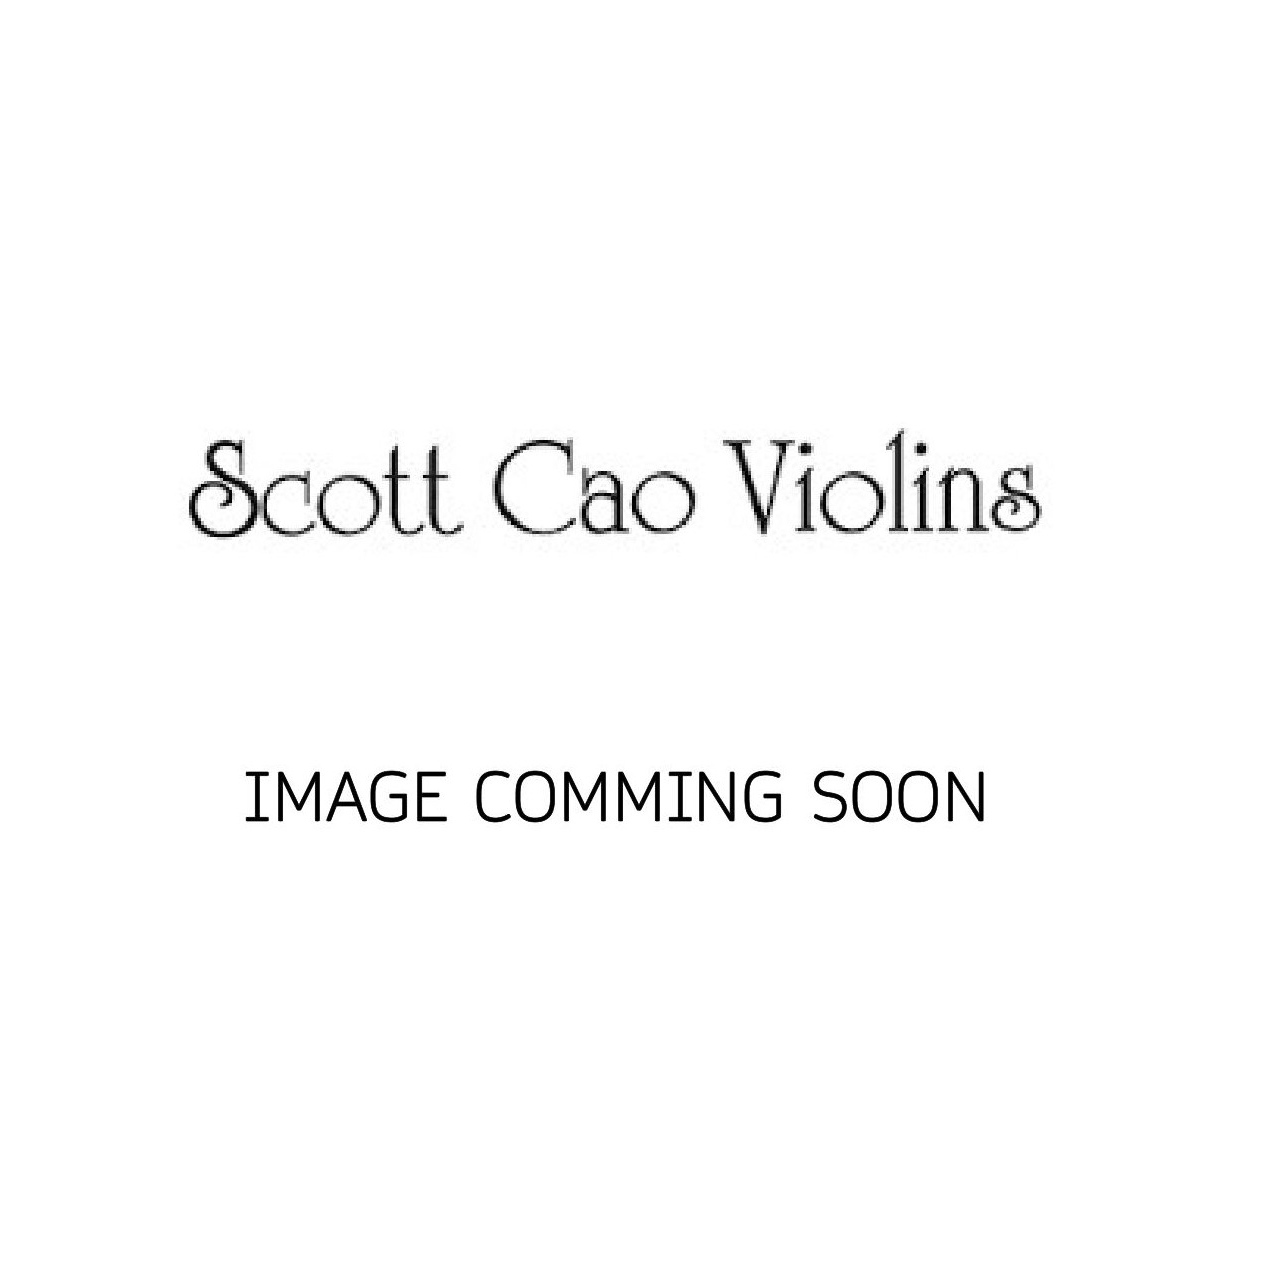 Scott Cao Viola 35,5 cm EU-komplett